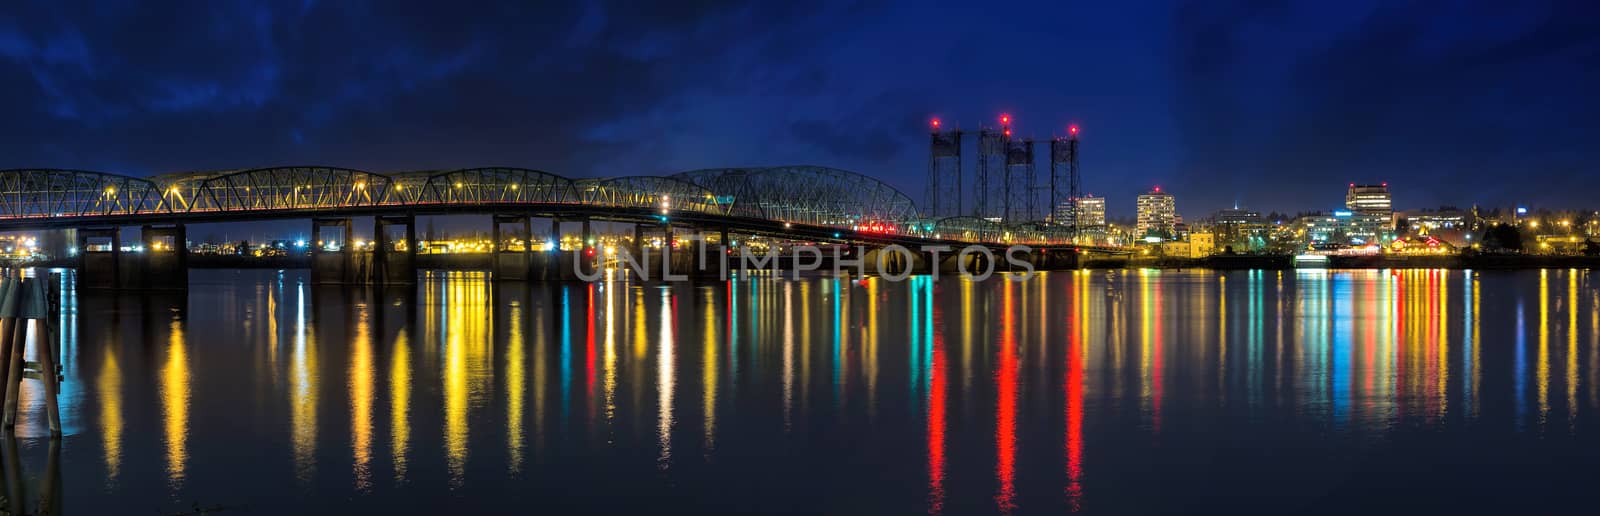 Columbia River Crossing Interstate 5 Bridge at Night by jpldesigns